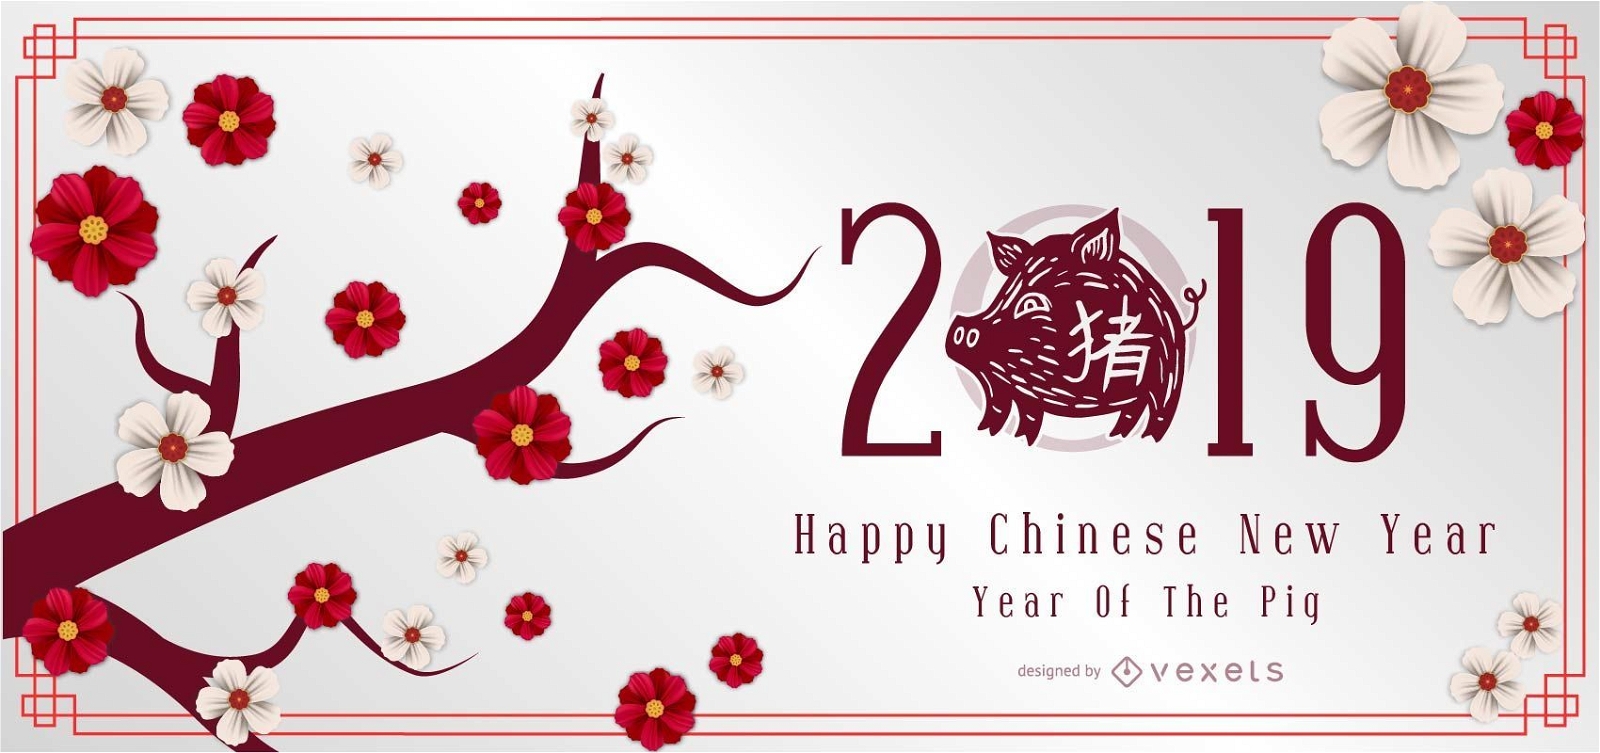 Chinese New Year Banner Design